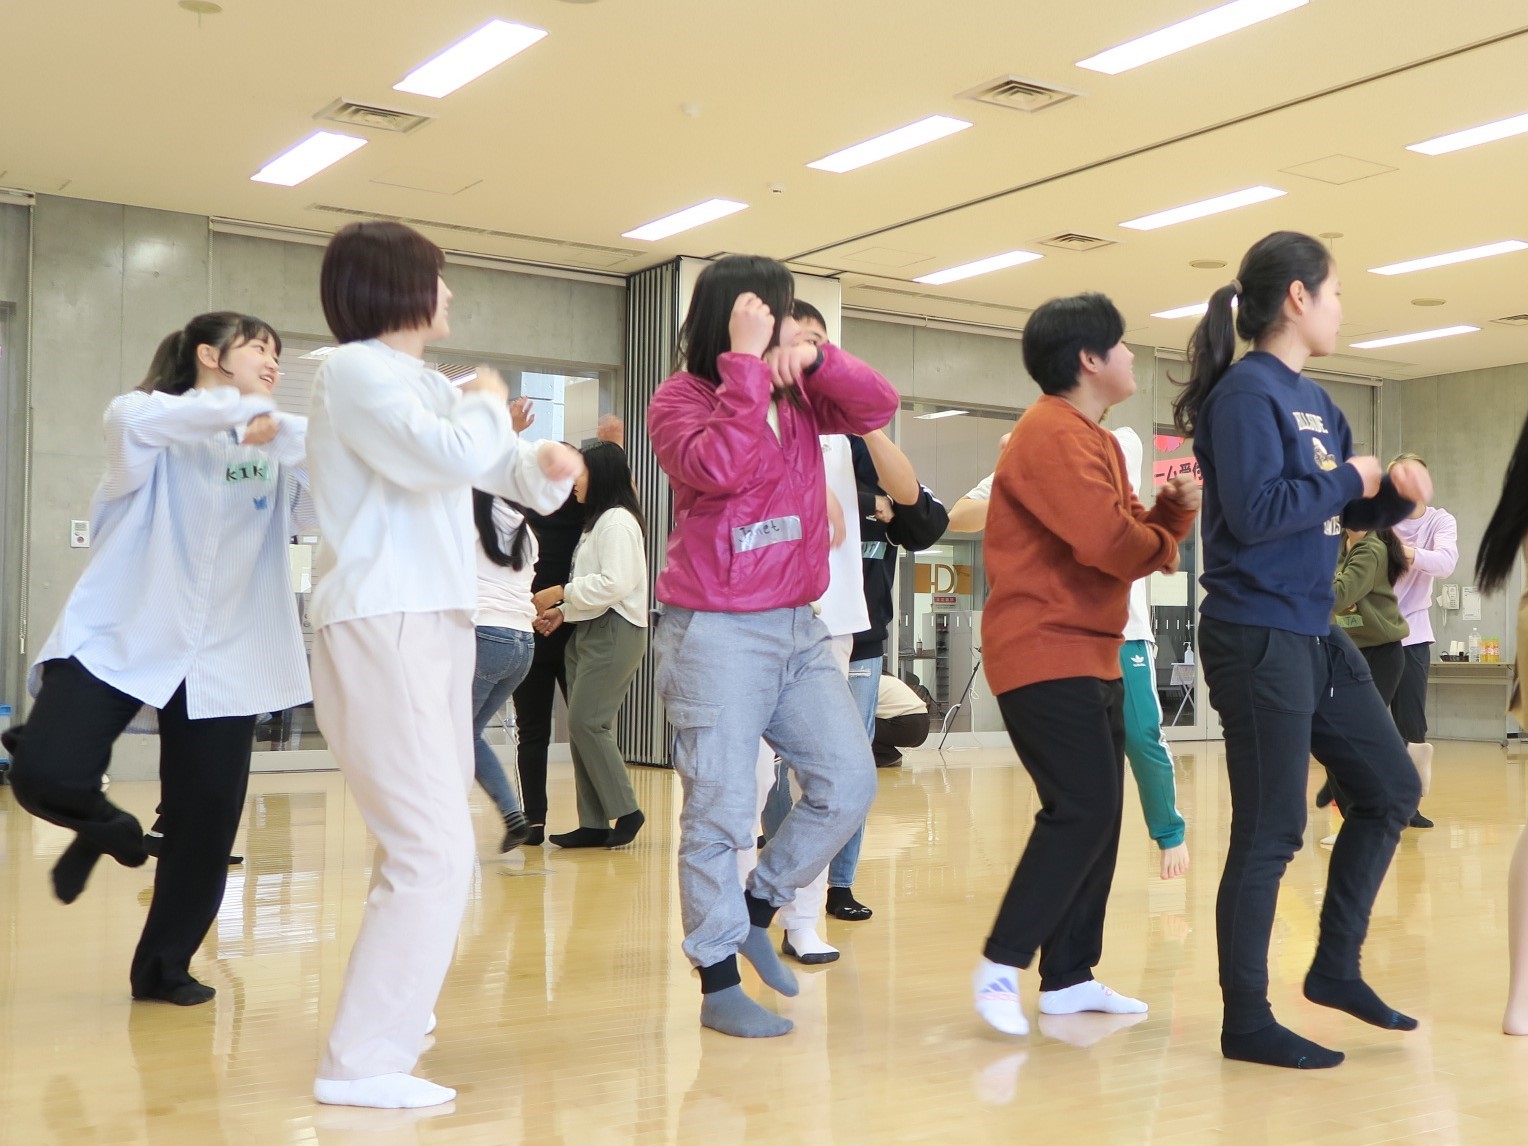 Report: "See you in Kitano-machi" Dance workshop (4)